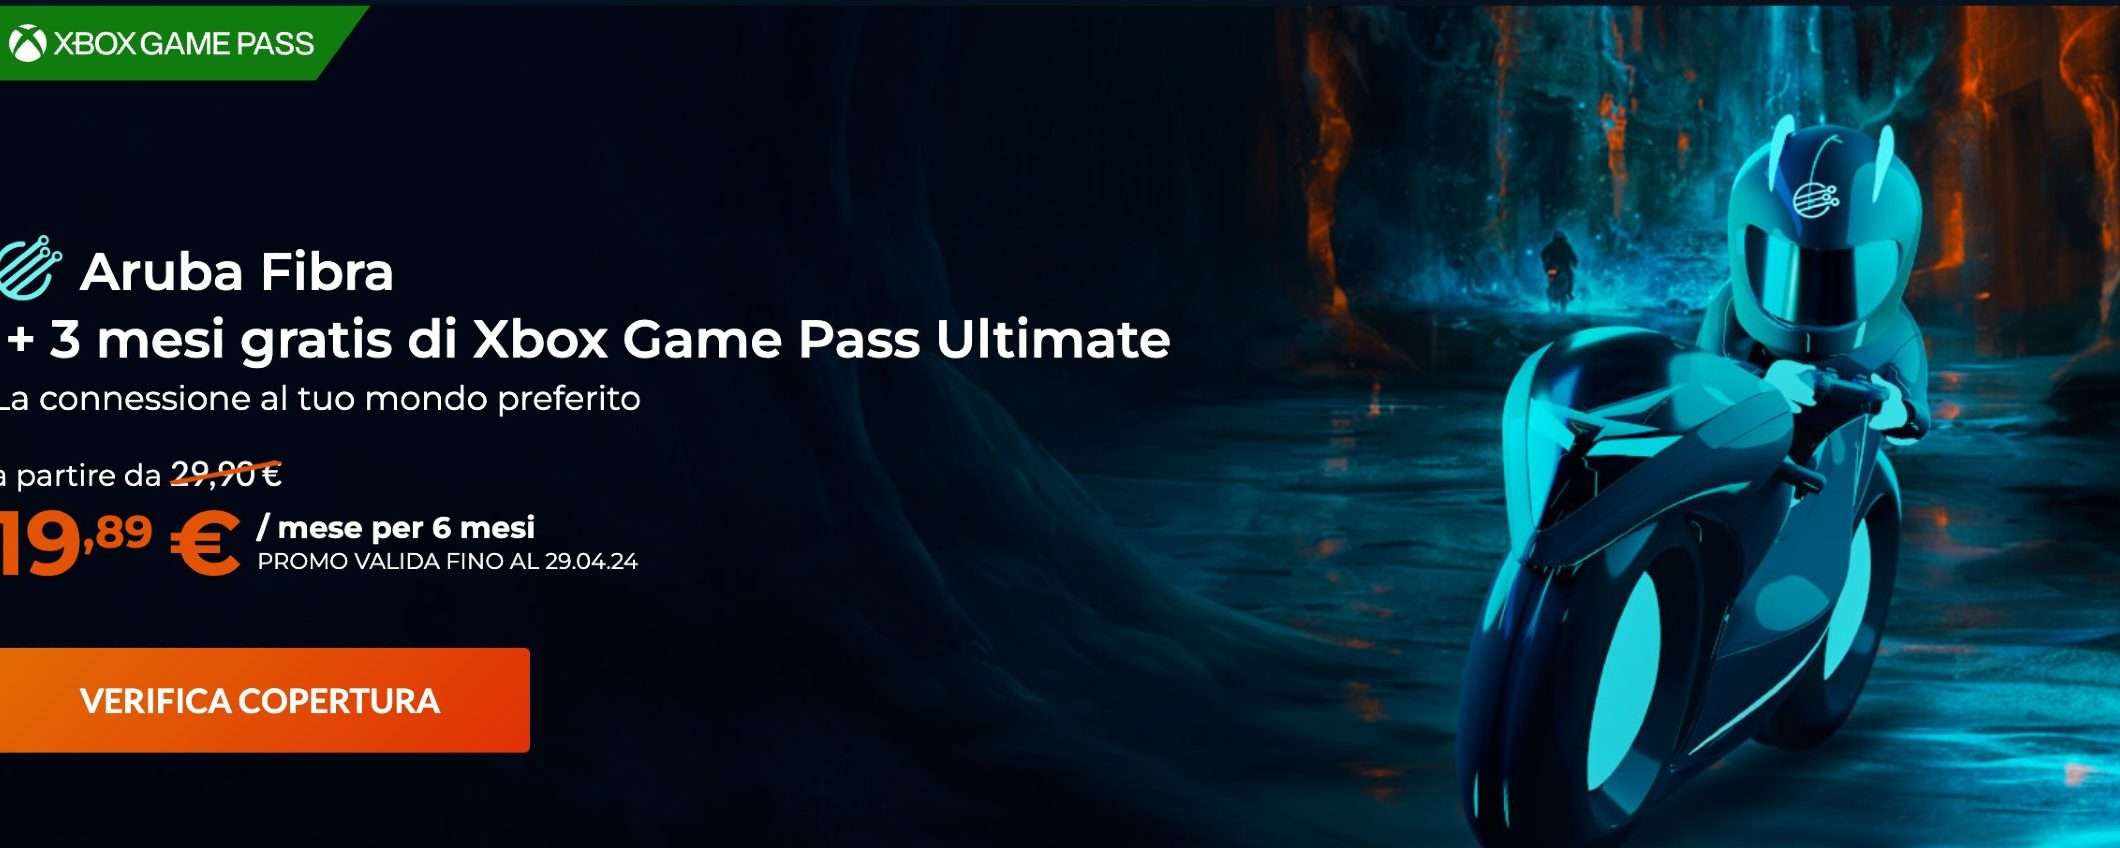 PROMO Aruba Fibra: 3 Mesi GRATIS di Xbox Game Pass